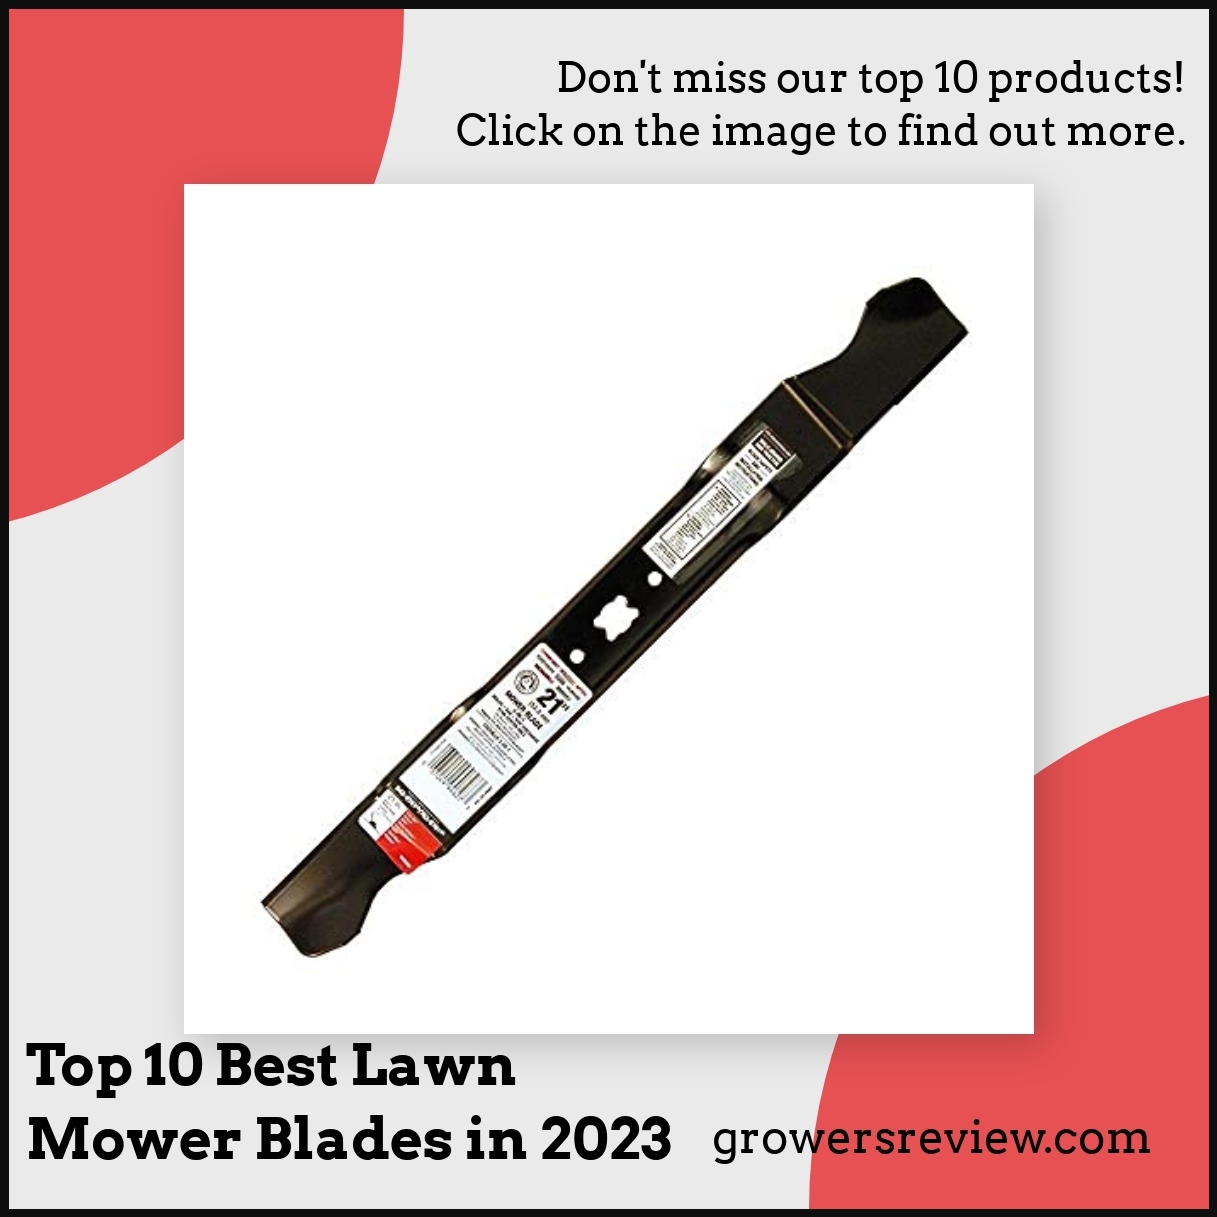 Top 10 Best Lawn Mower Blades in 2023